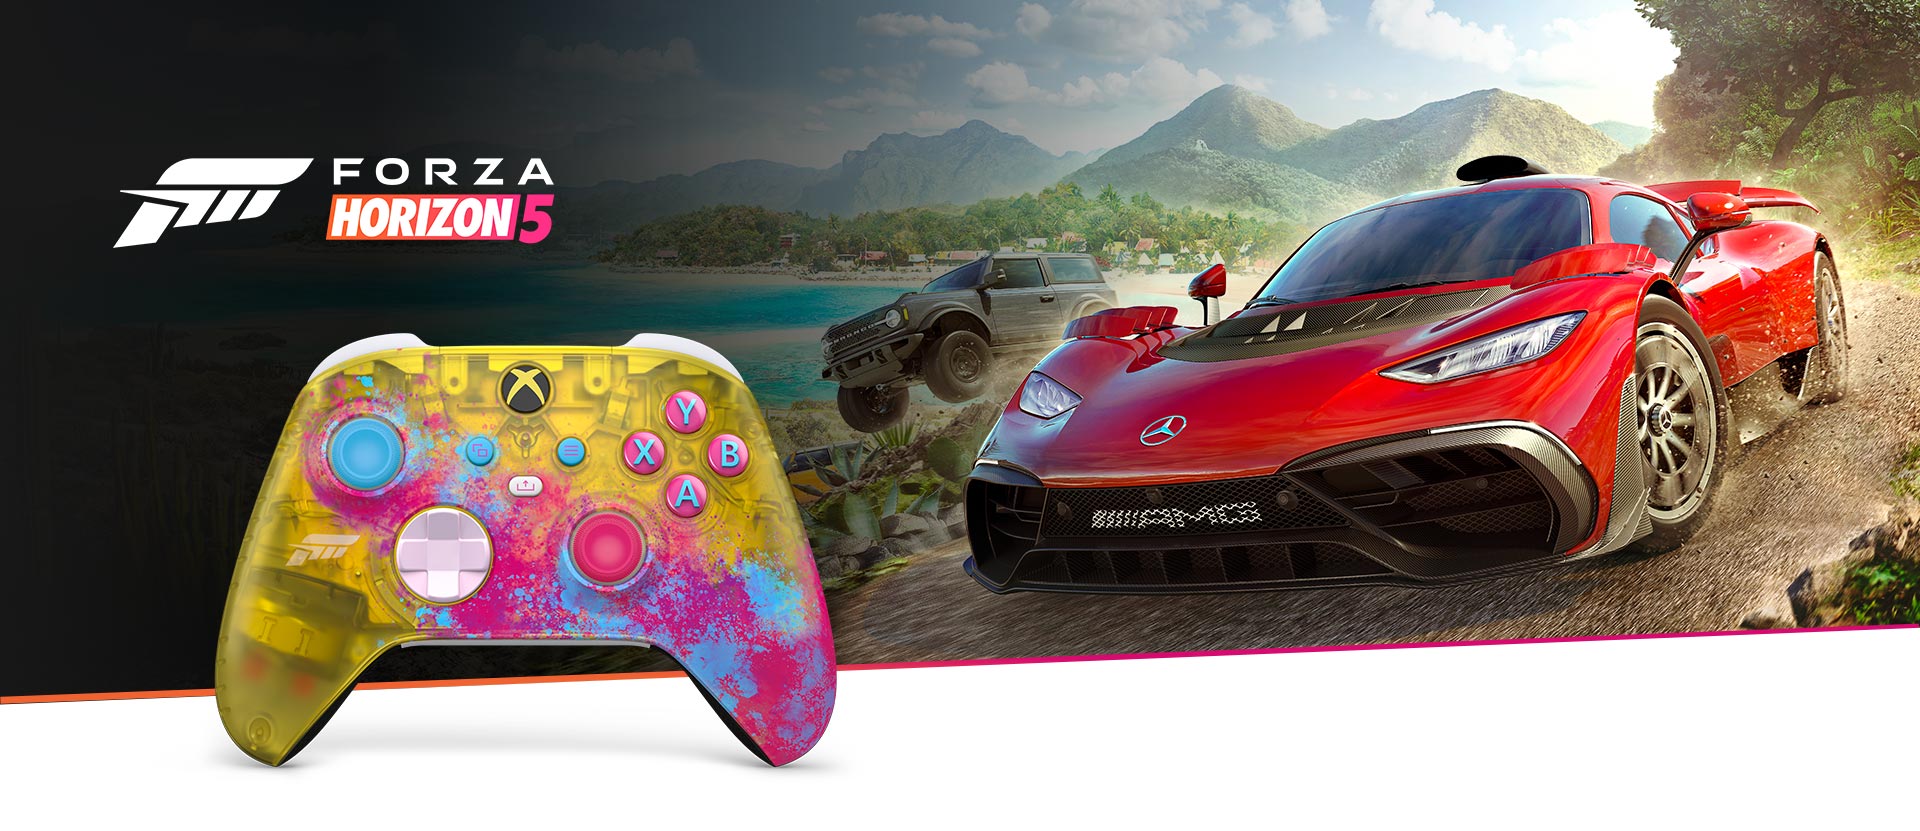 Xbox Wireless Controller Forza Horizon 5 Limited Edition